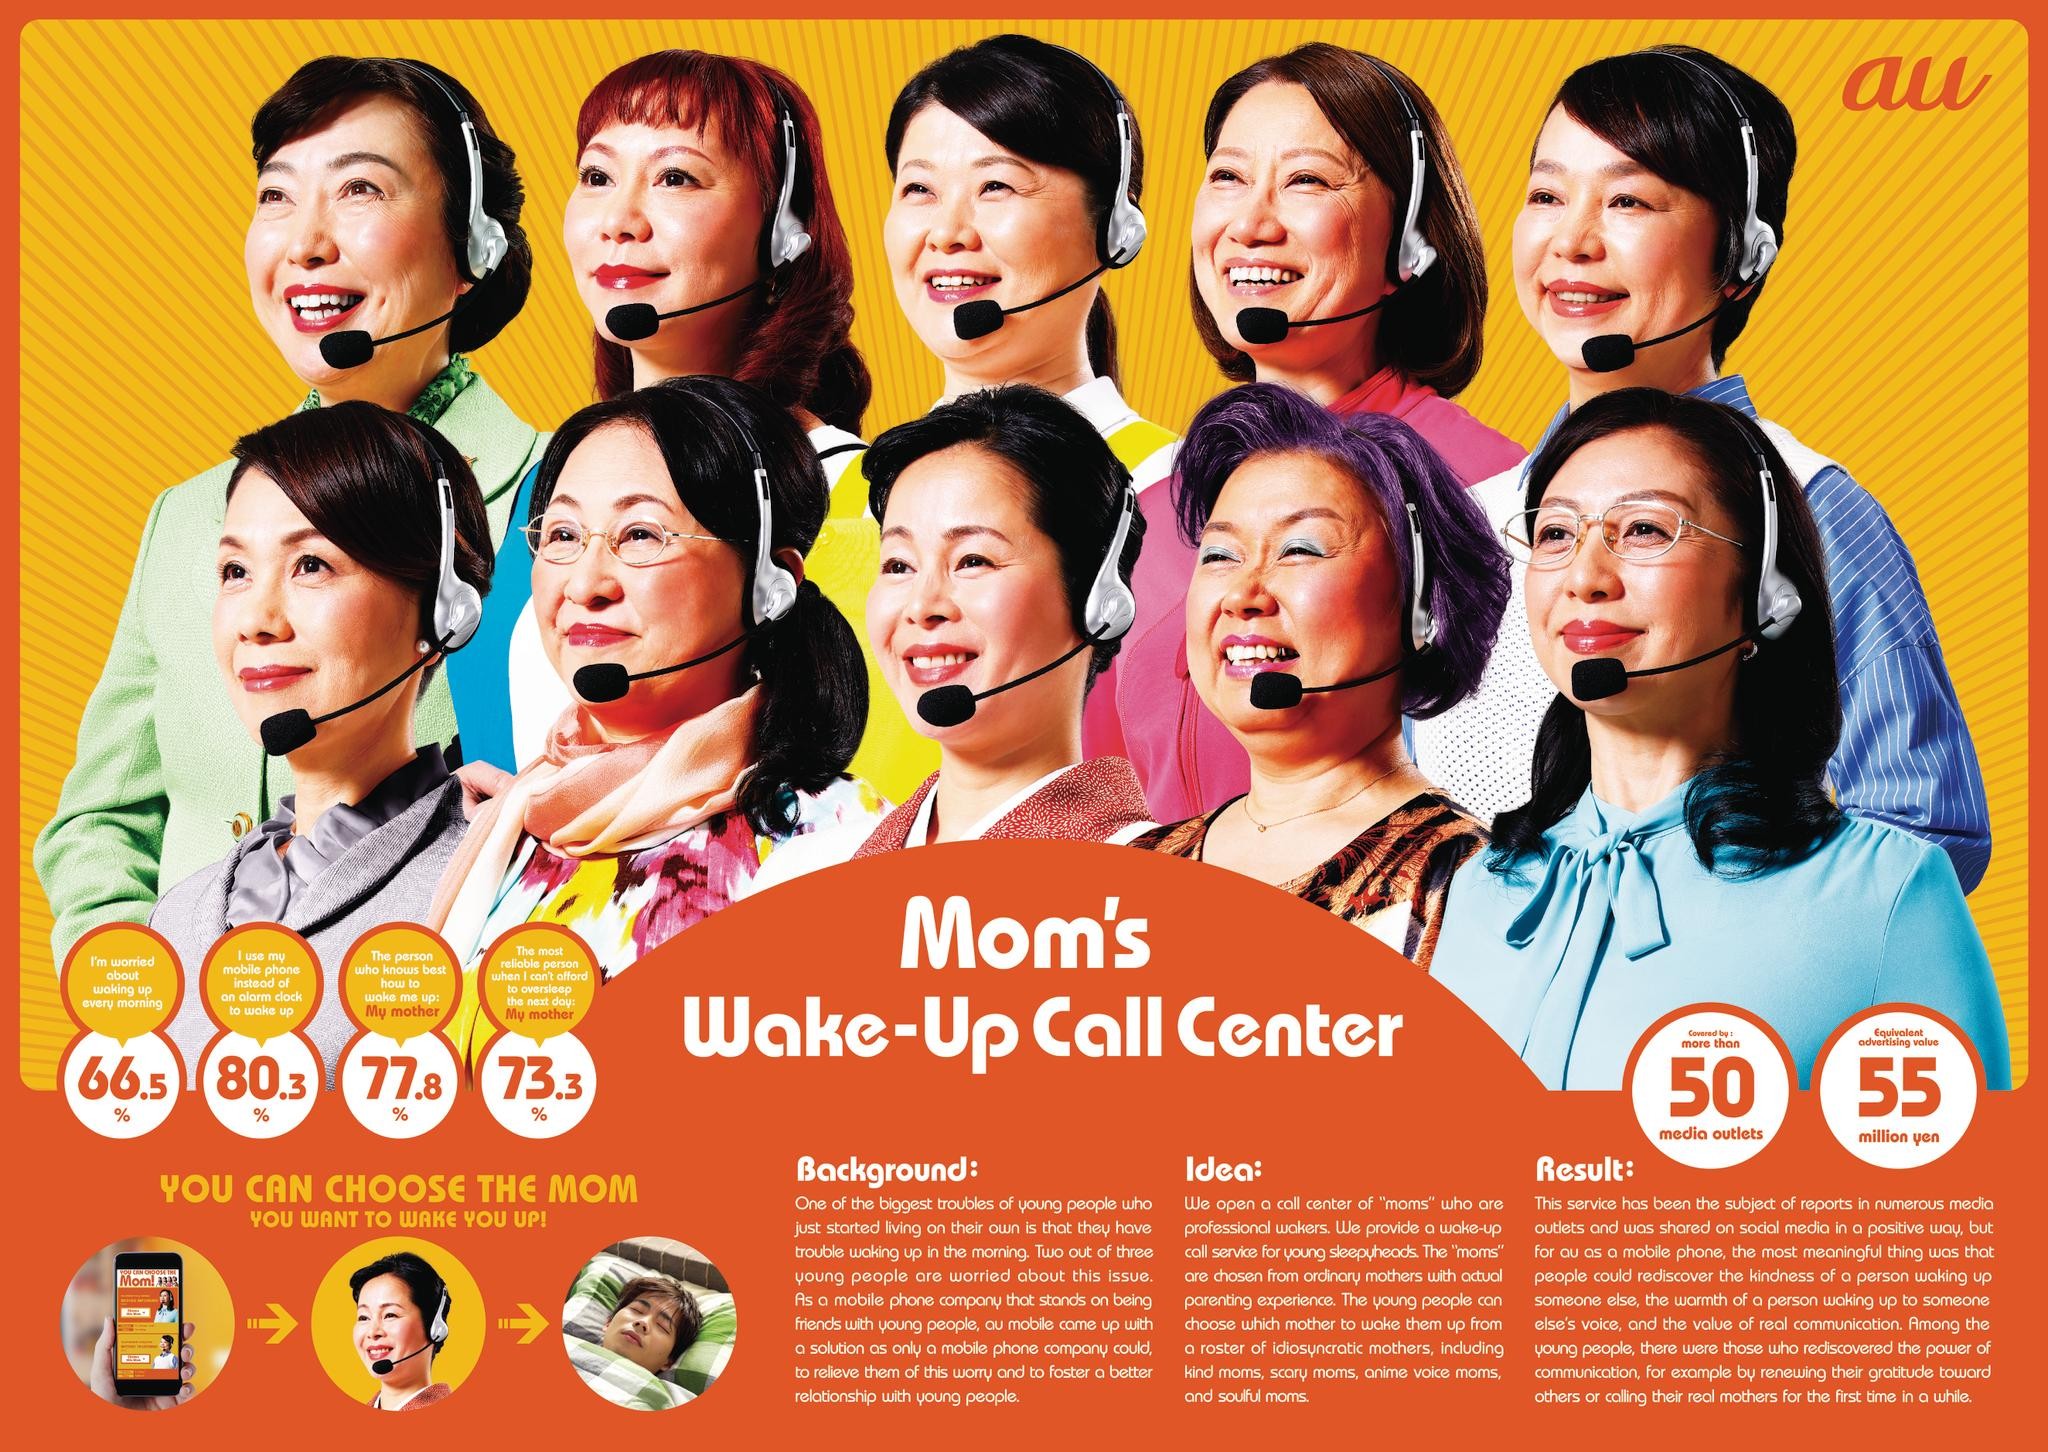 Mom’s Wake-Up Call Center